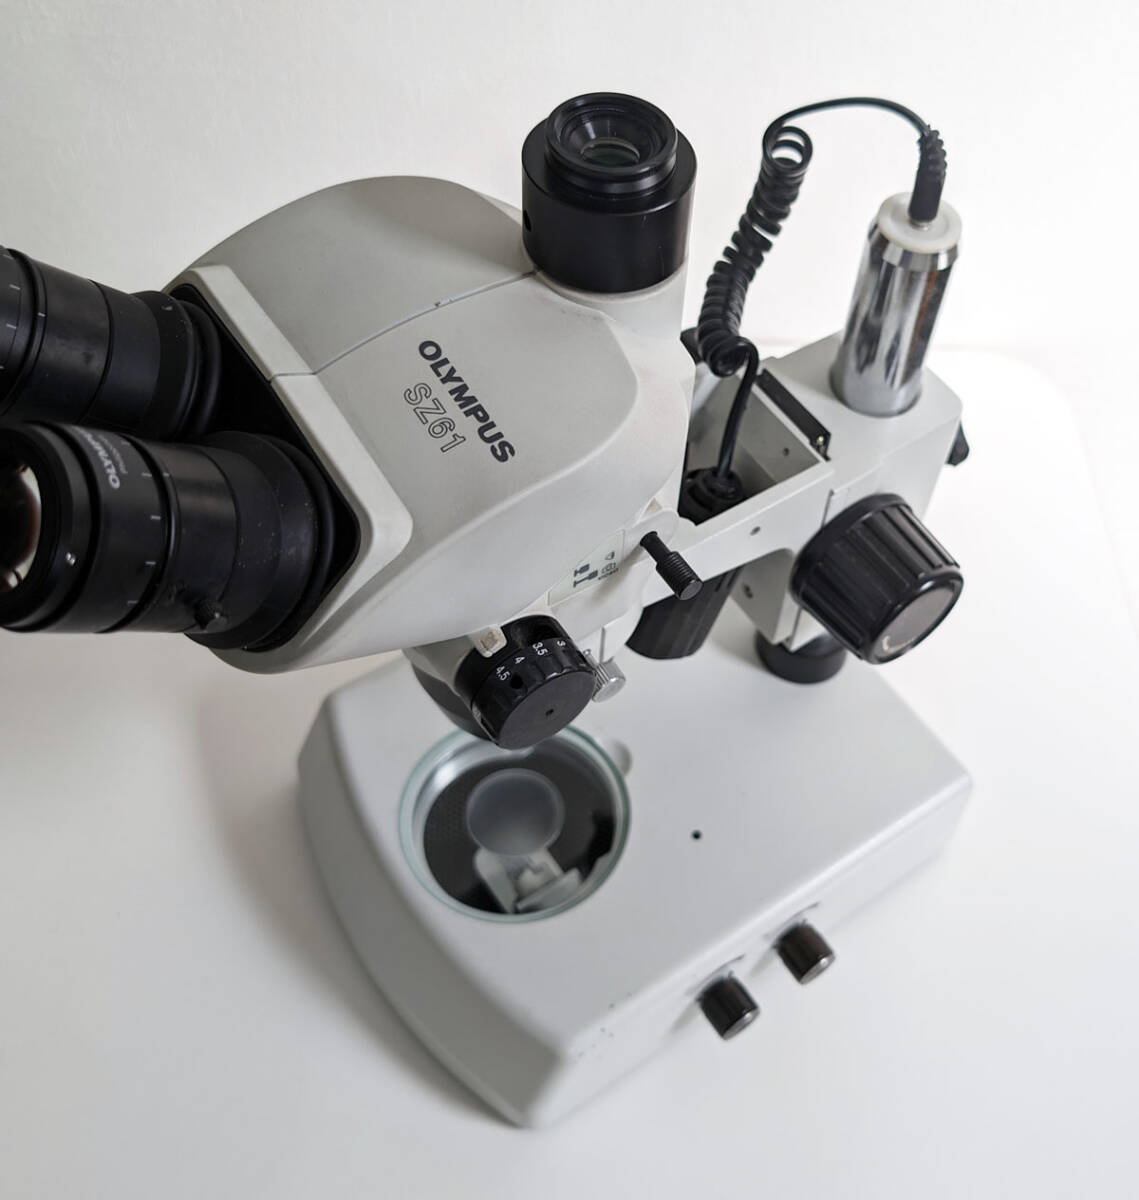  Olympus SZ61 реальный body микроскоп 45 раз Olympus Stereo Microscope б/у бесплатная доставка 